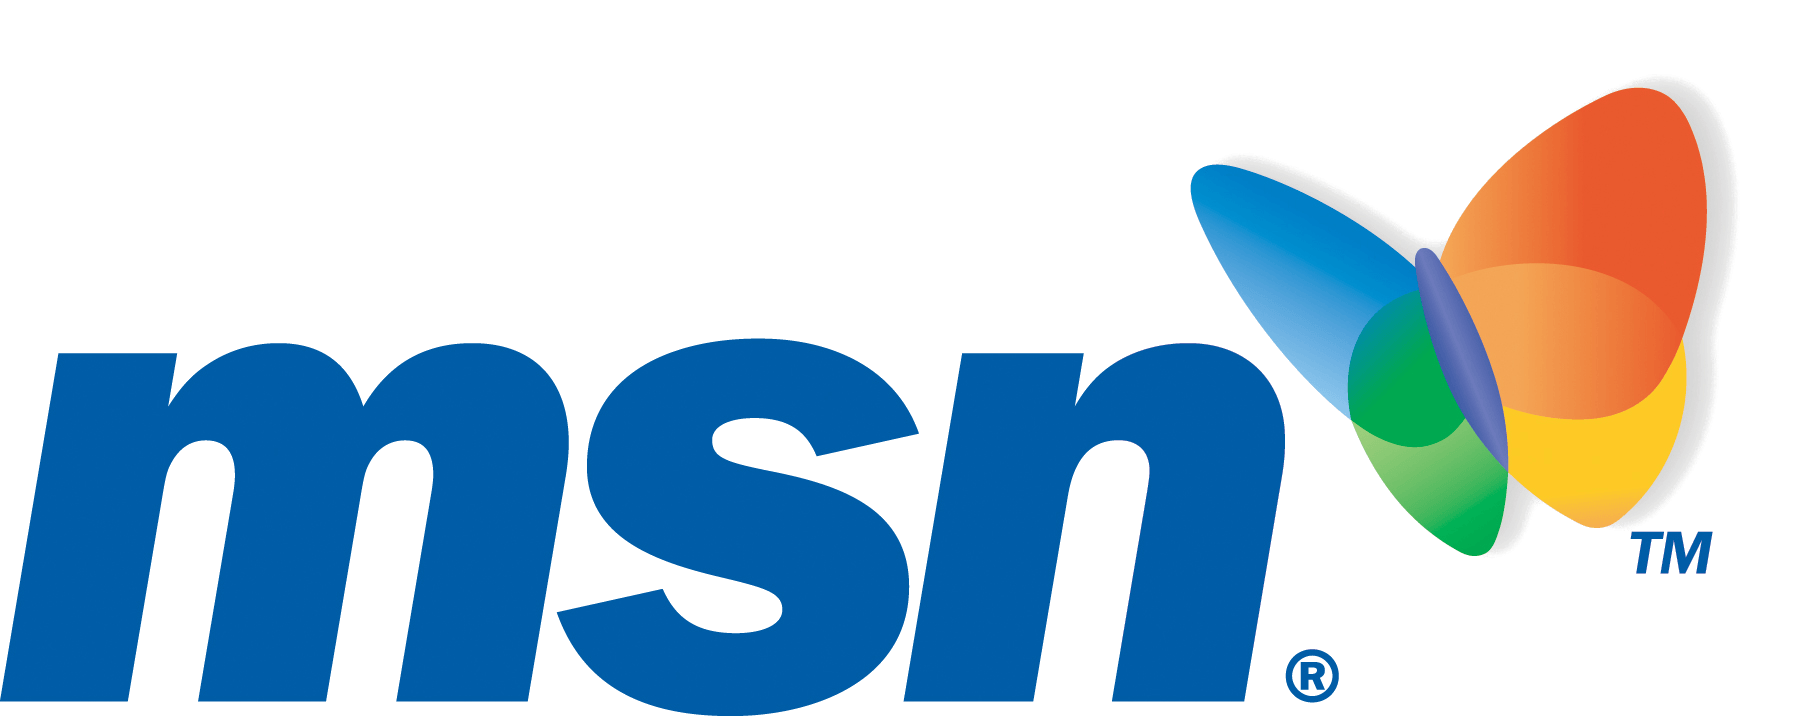 MSN Blue Logo - MSN slowly returning after global outage | Brands + Logos + Branding ...